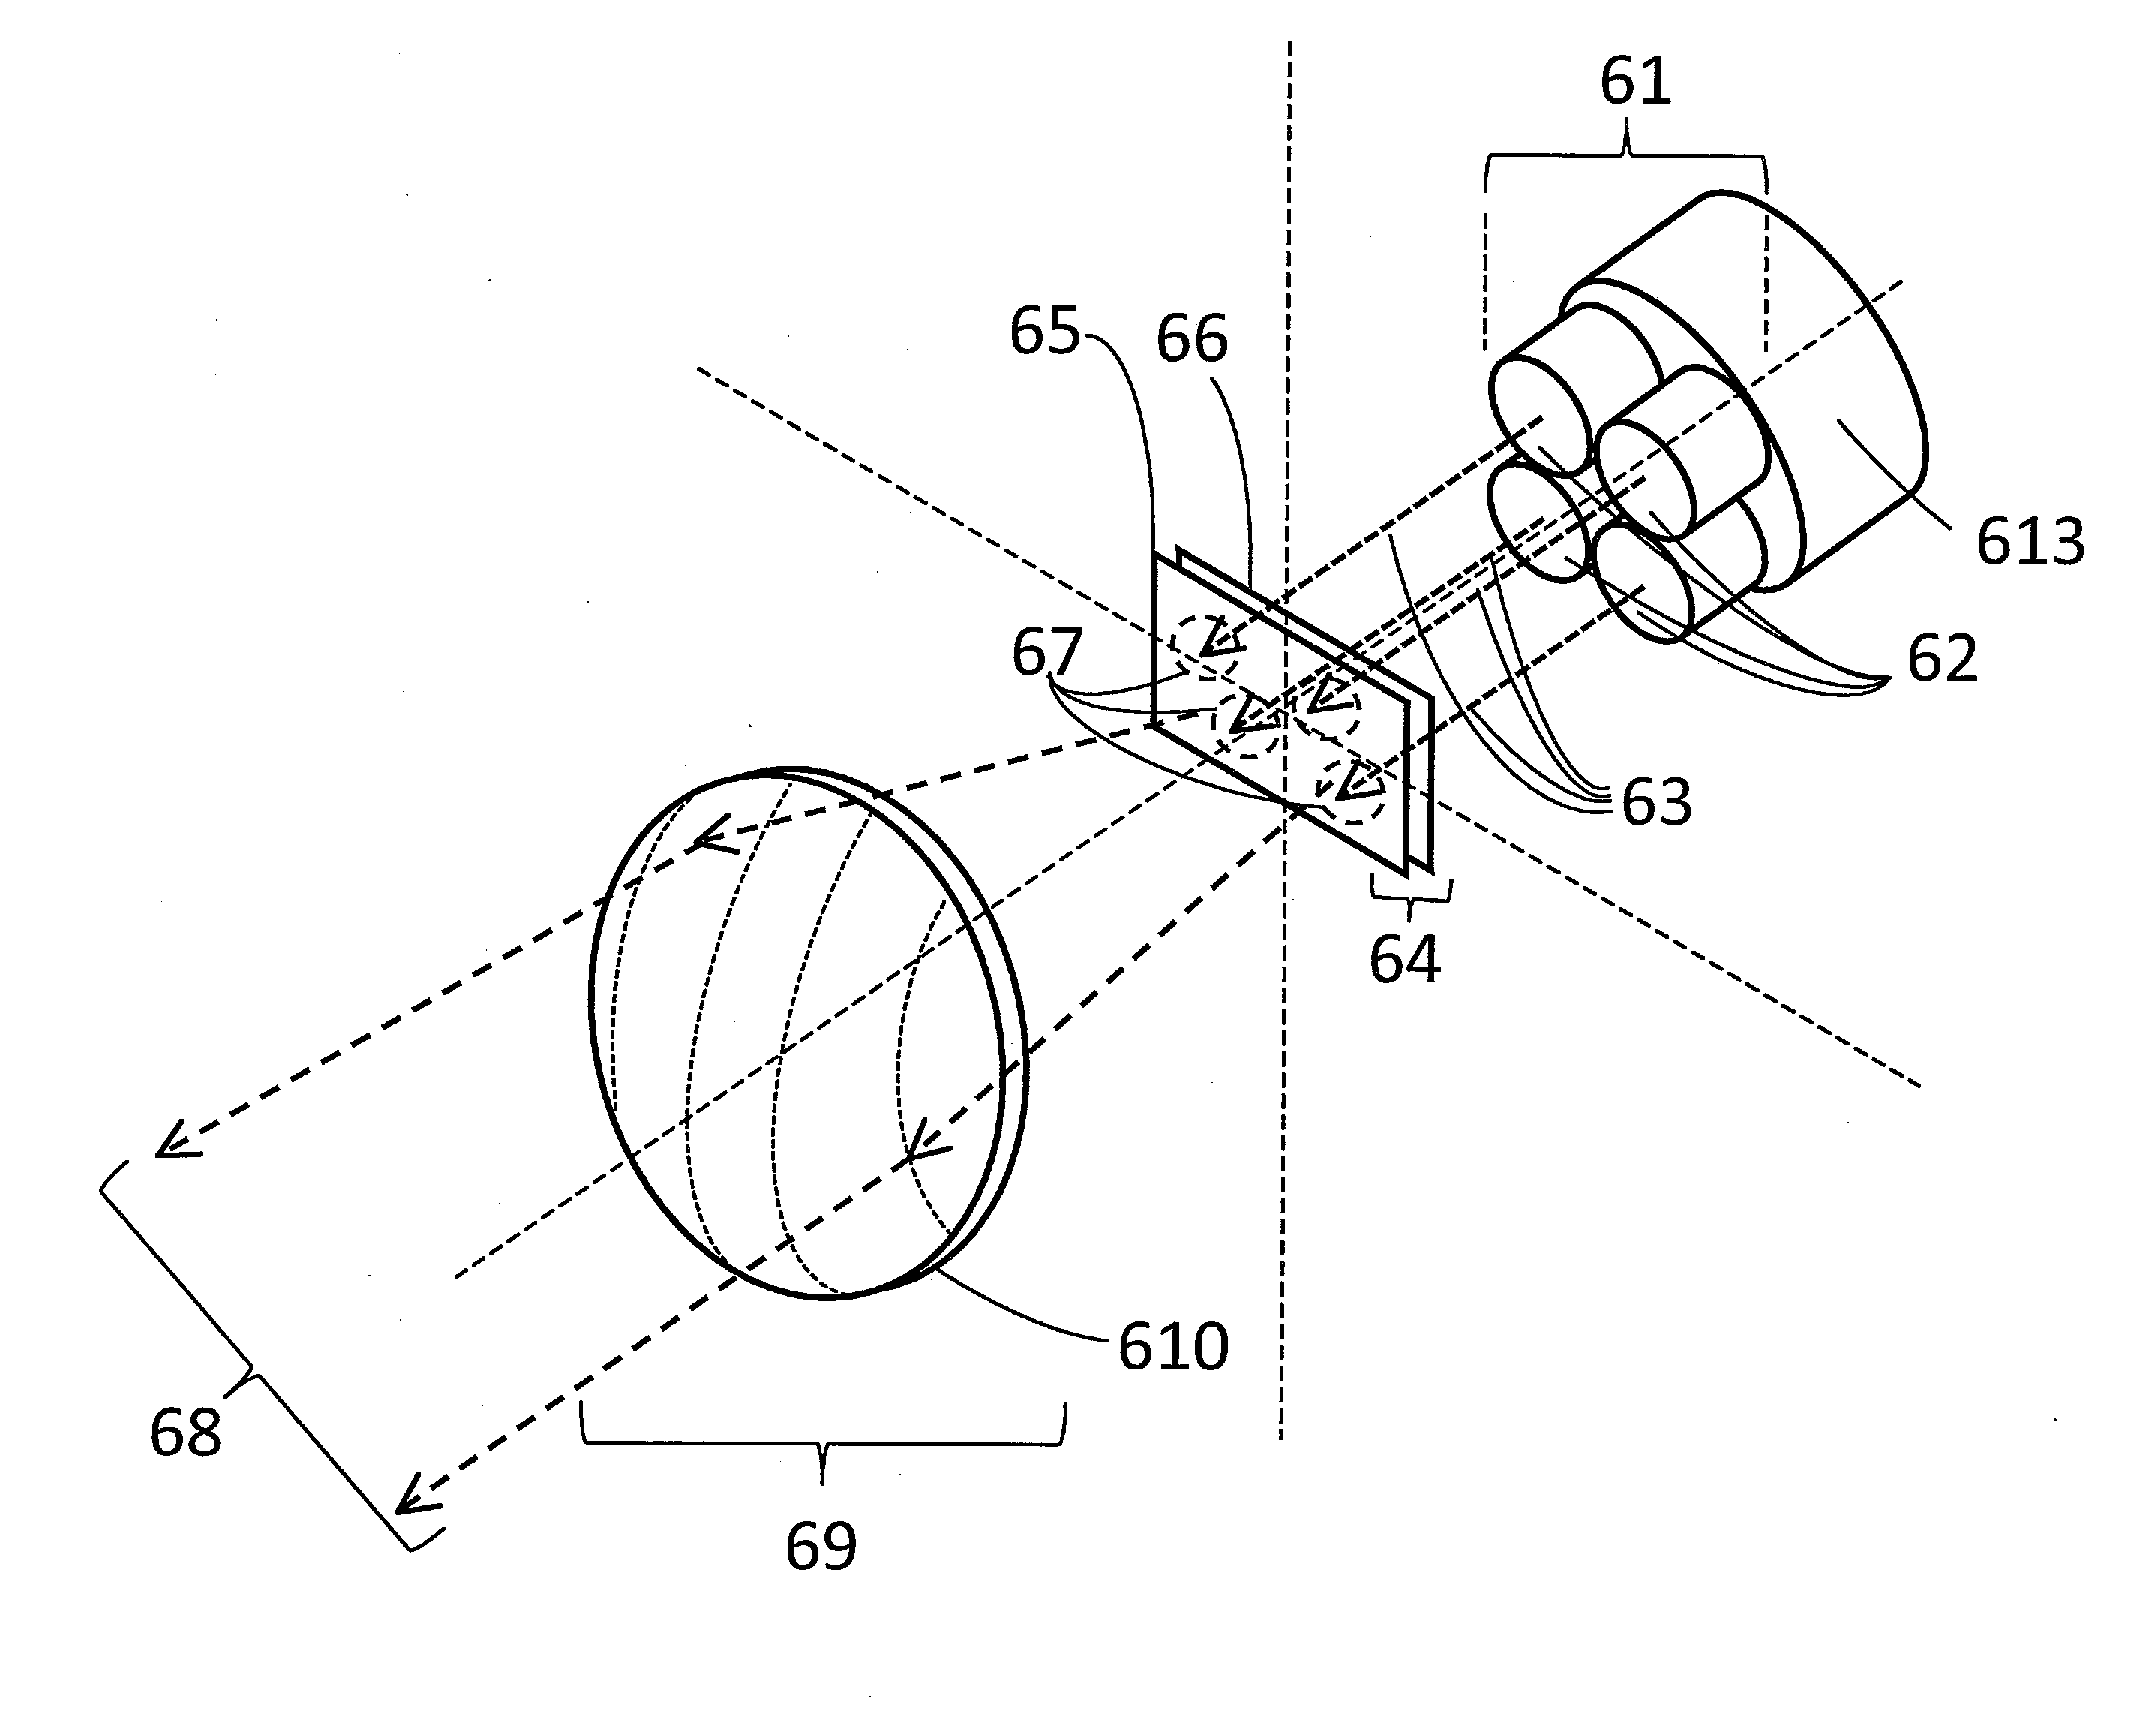 Headlight system incorporating adaptive beam function